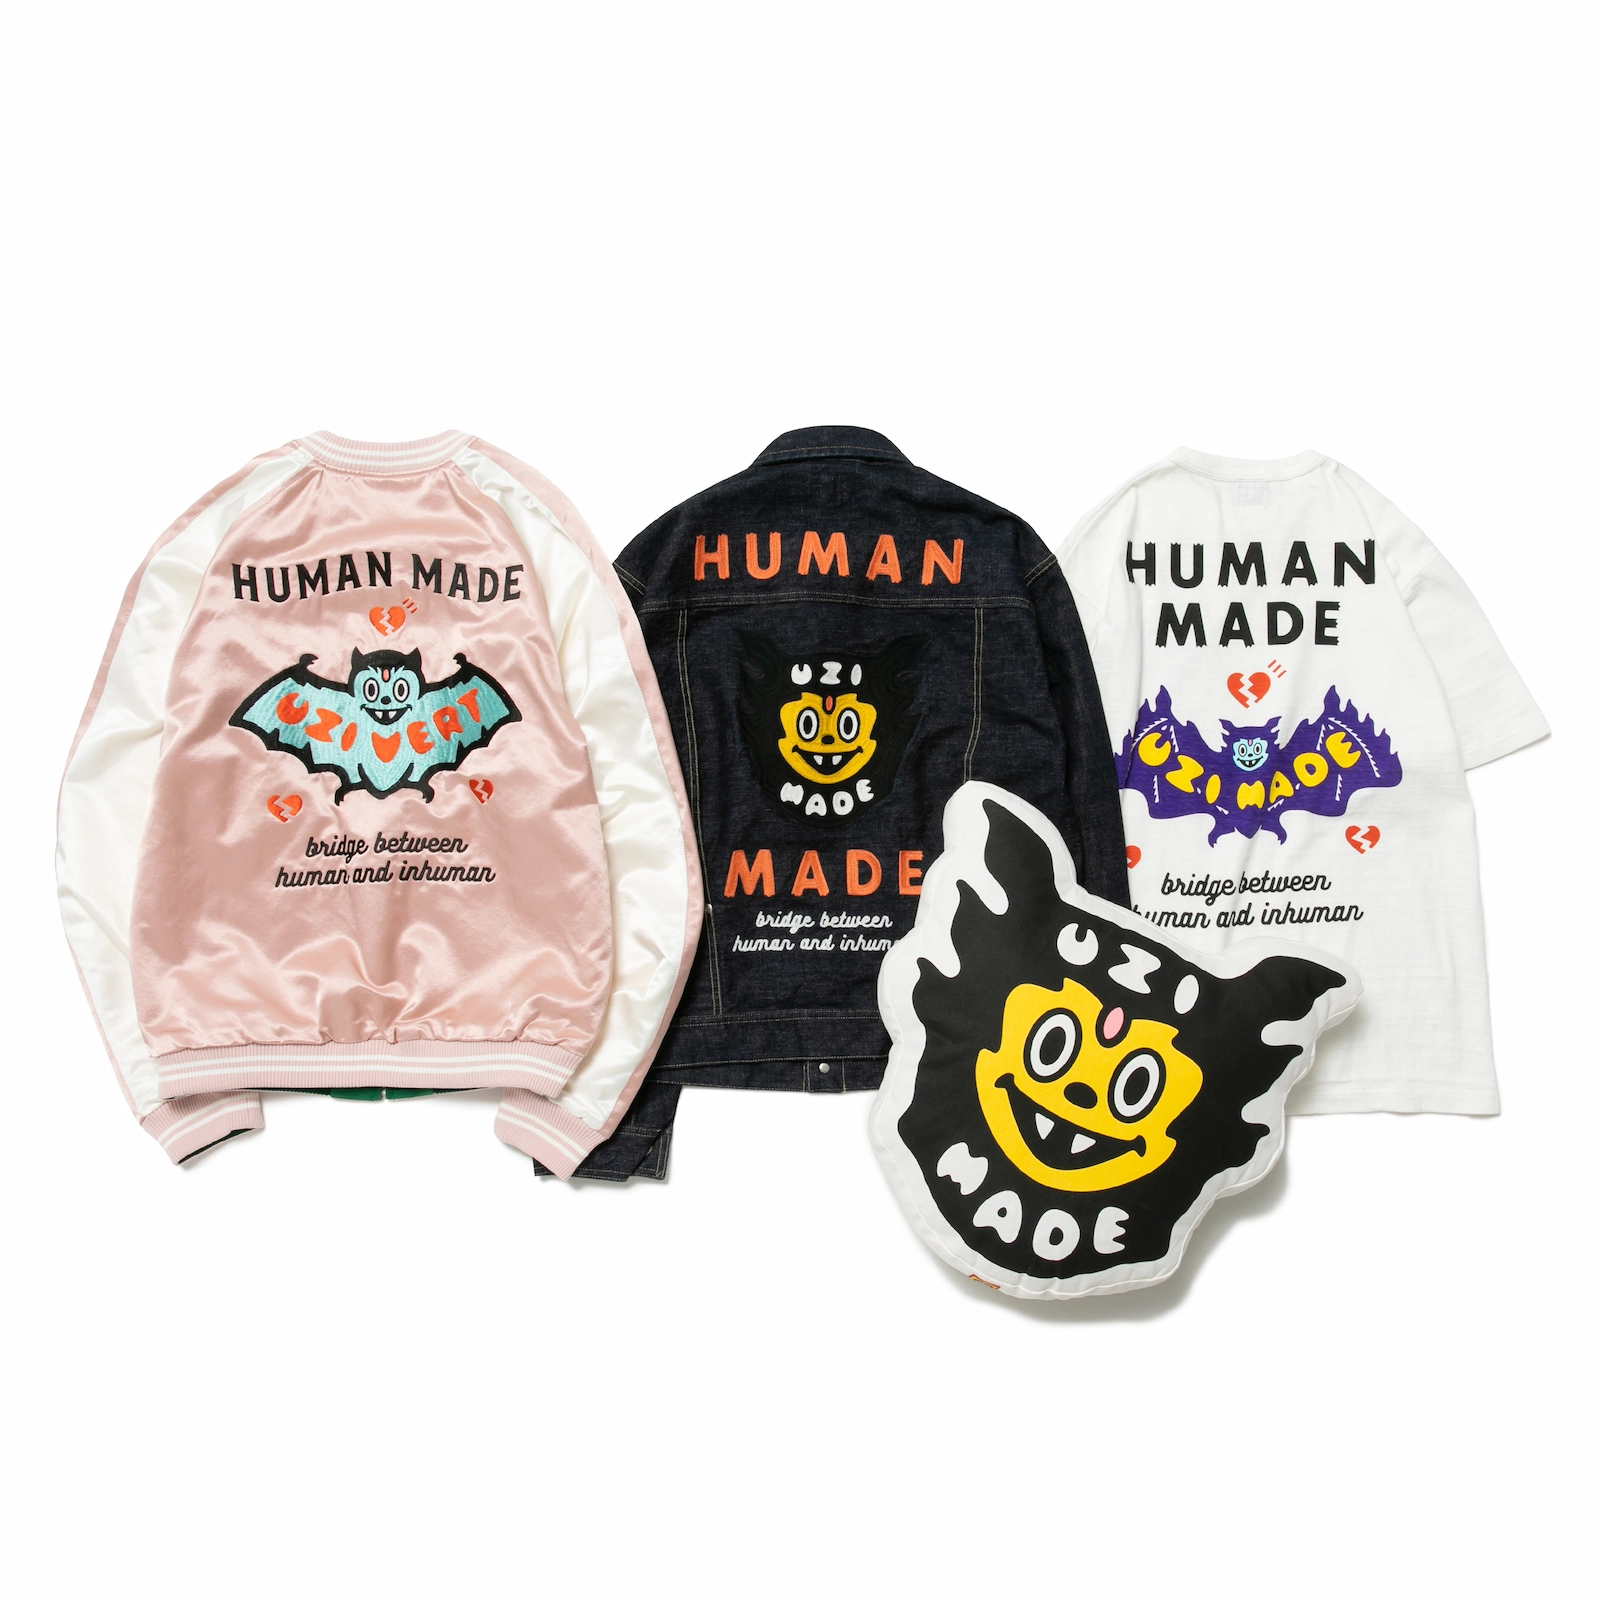 HUMAN MADE x Lil Uzi Vert “UZI MADE” Collection | HUMAN MADE Inc.